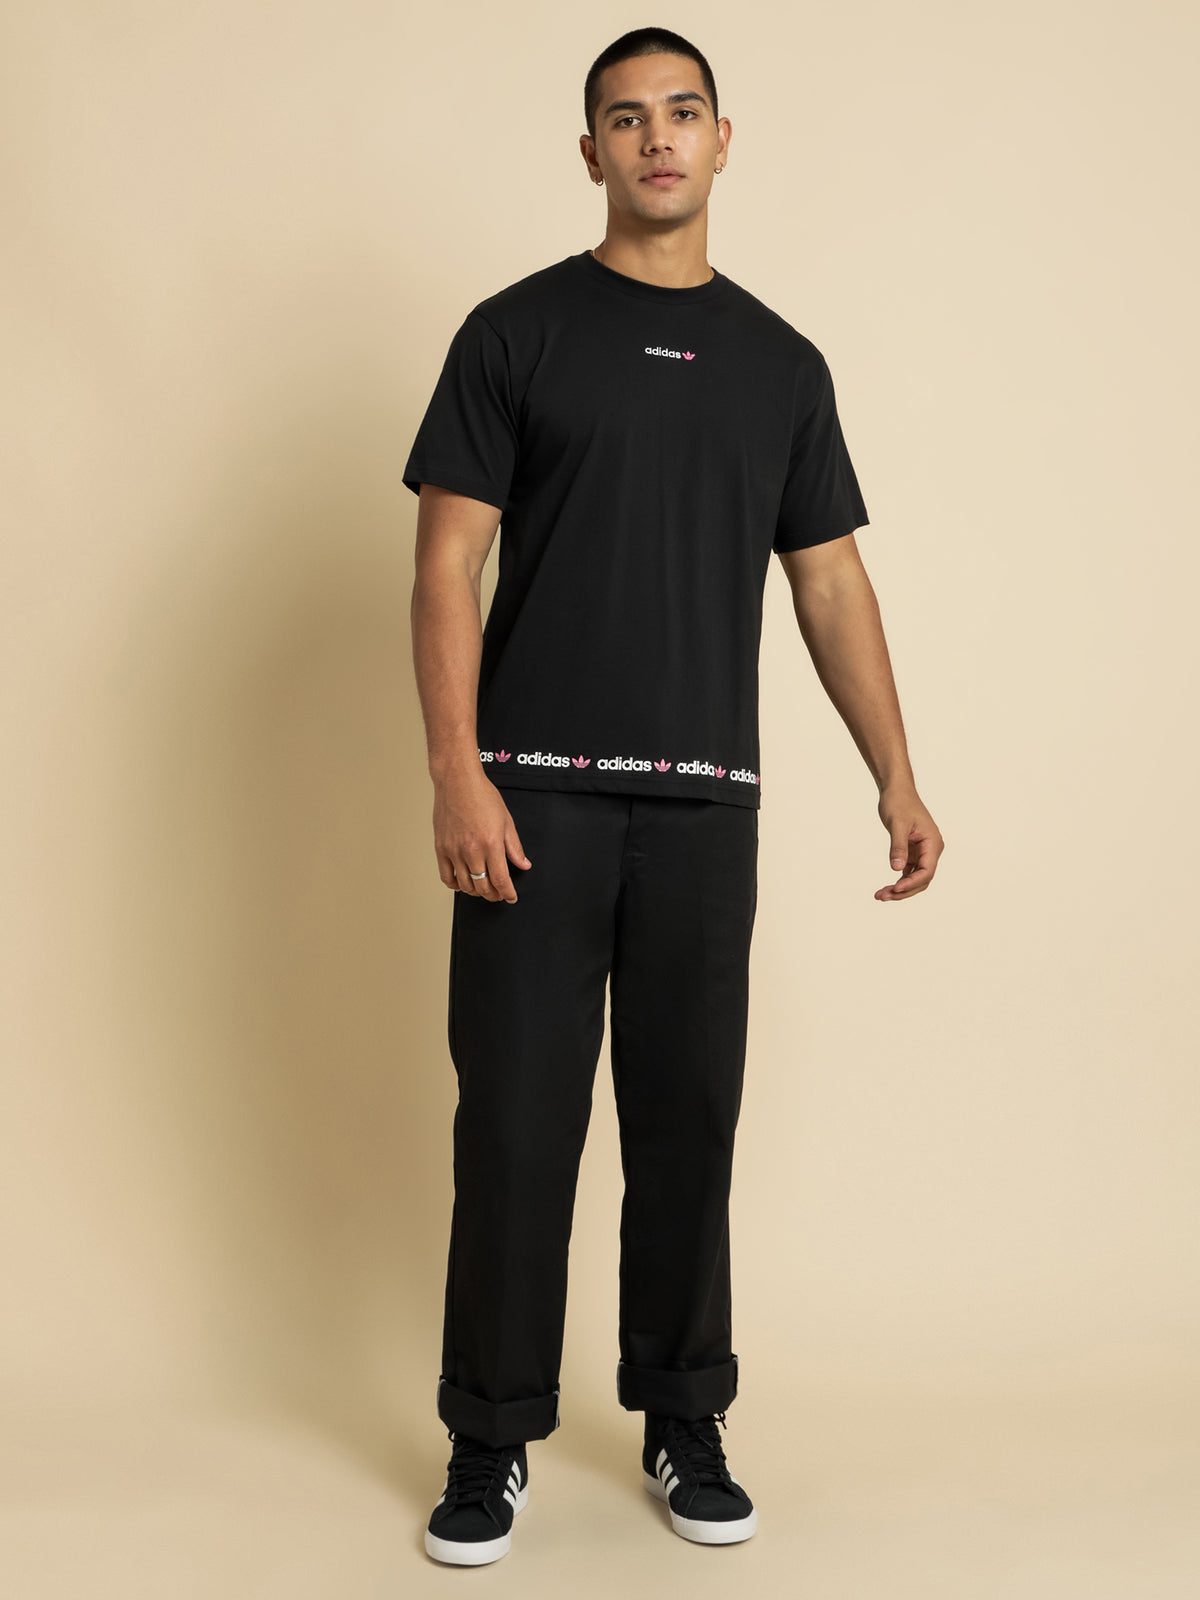 Linear Repeat T-Shirt in Black